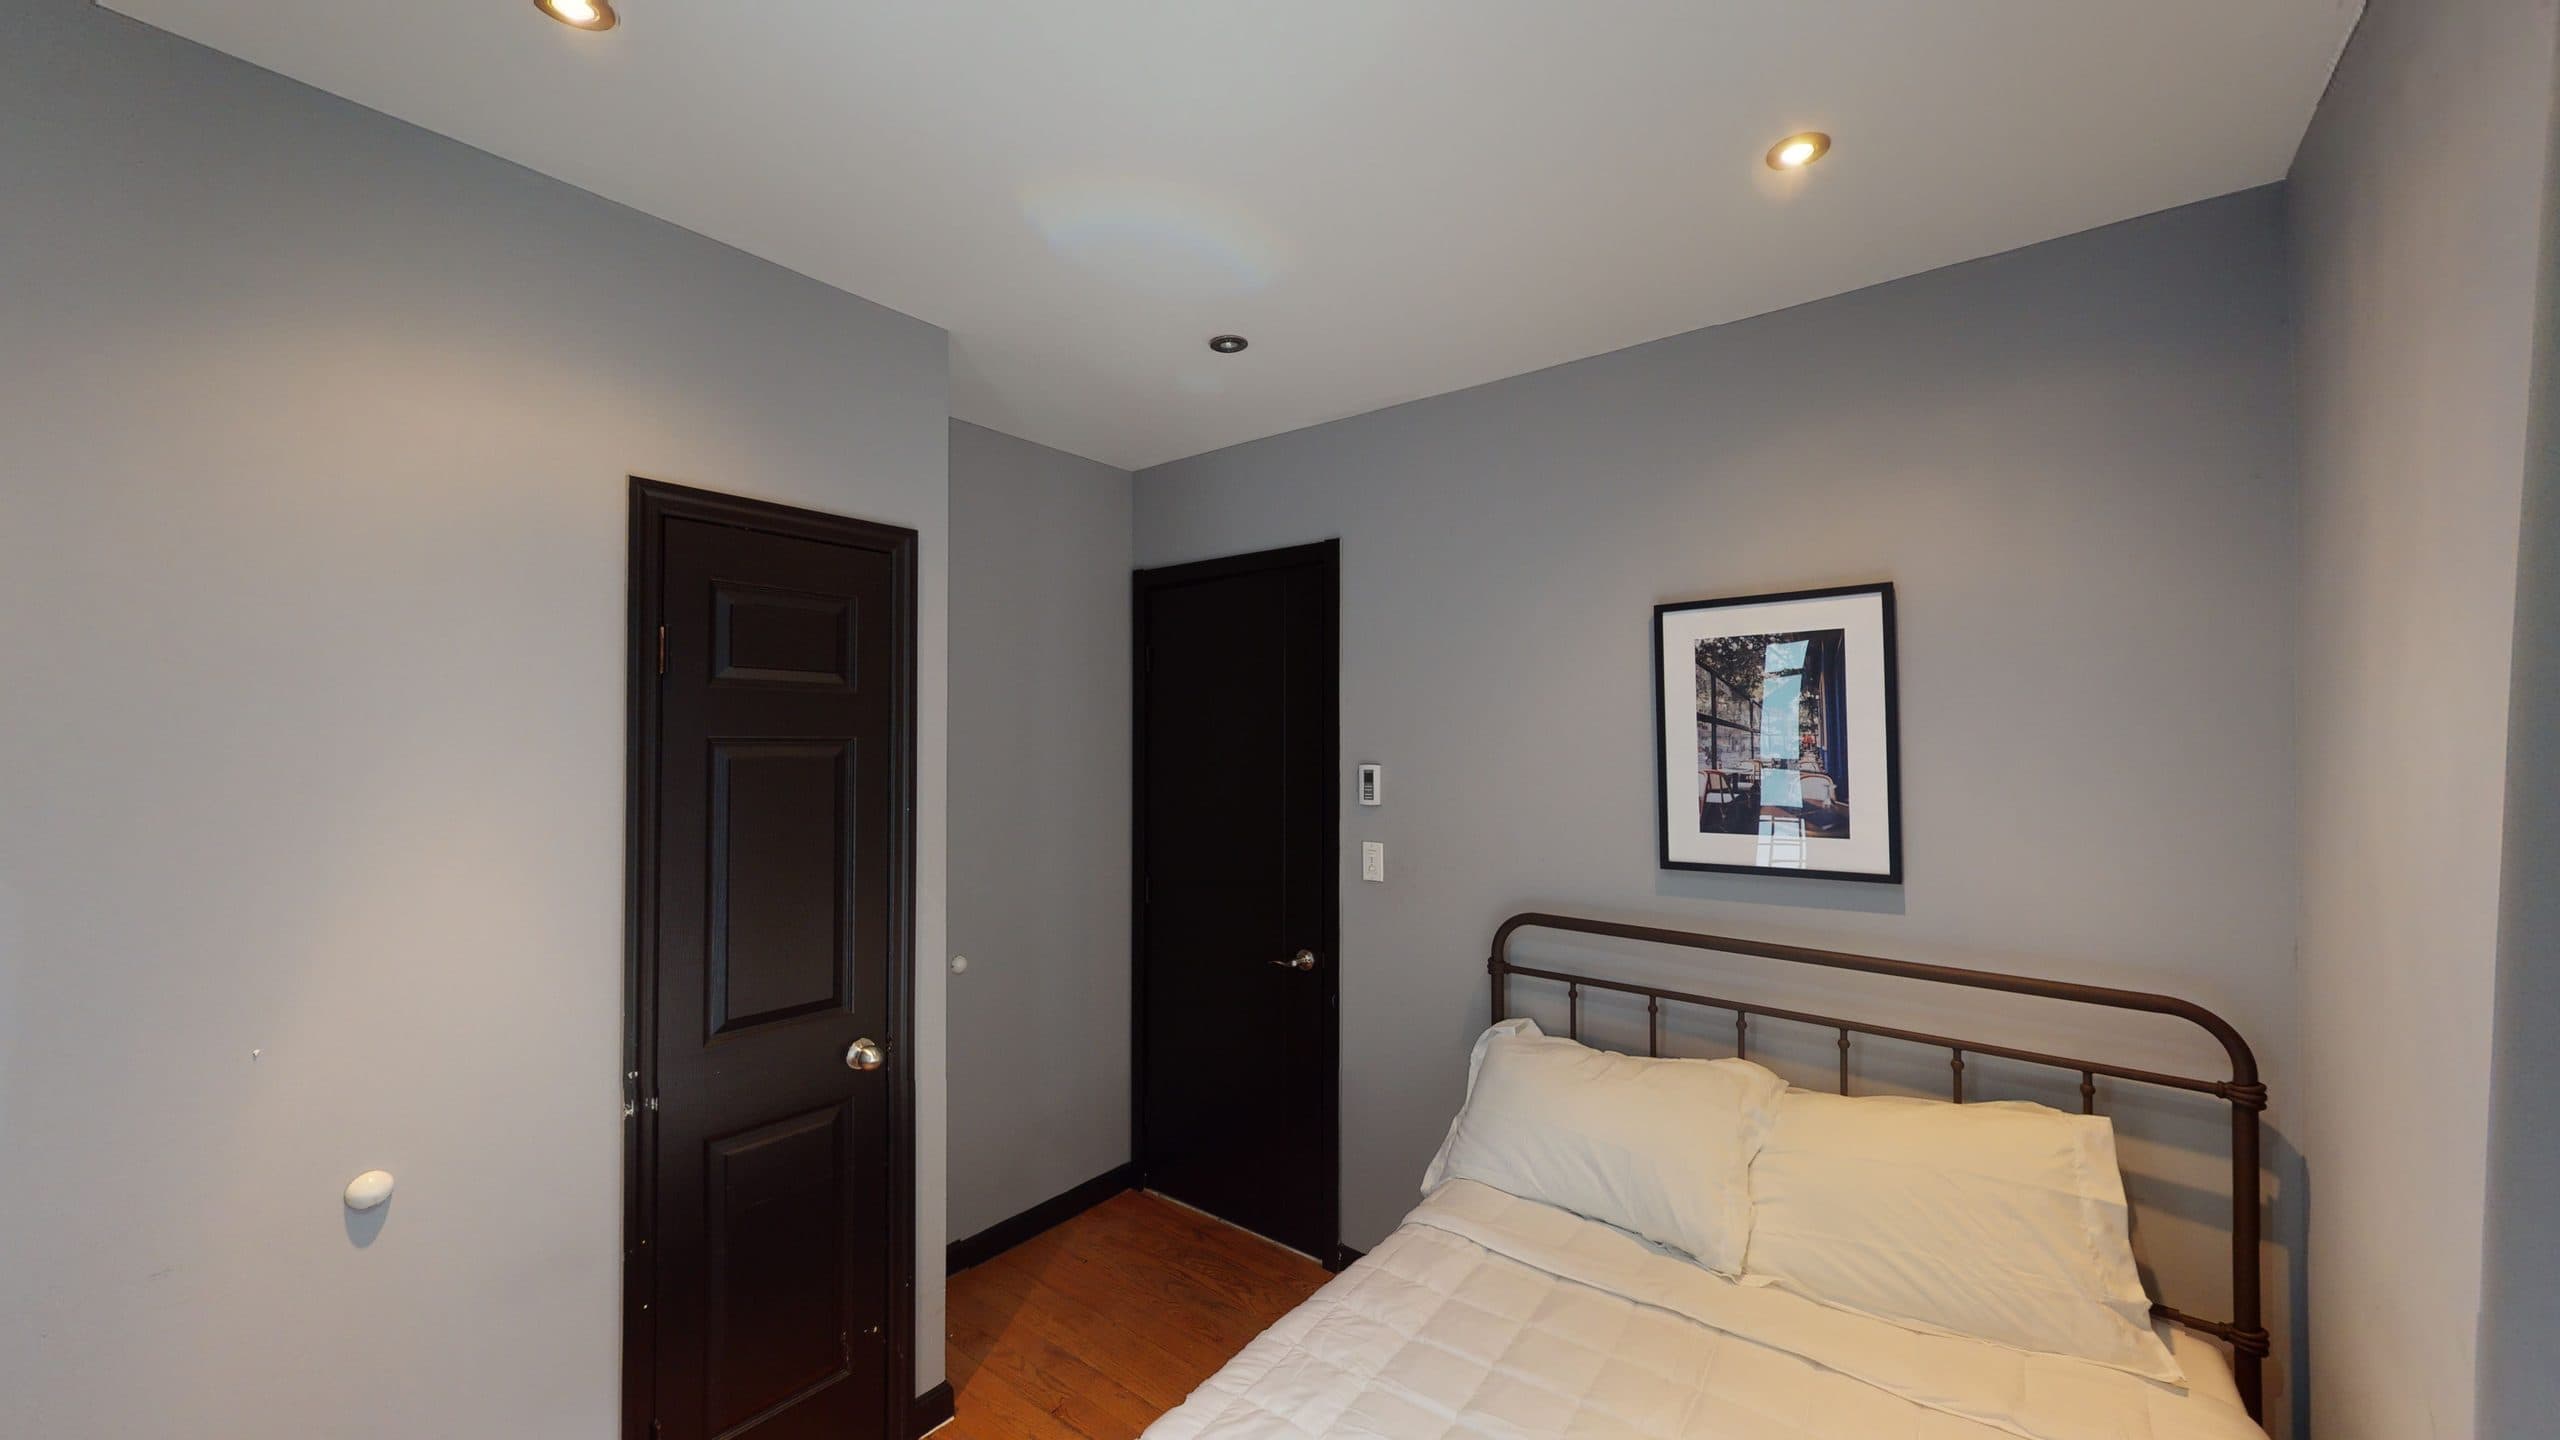 Photo 3 of #1512: Full Bedroom B at June Homes